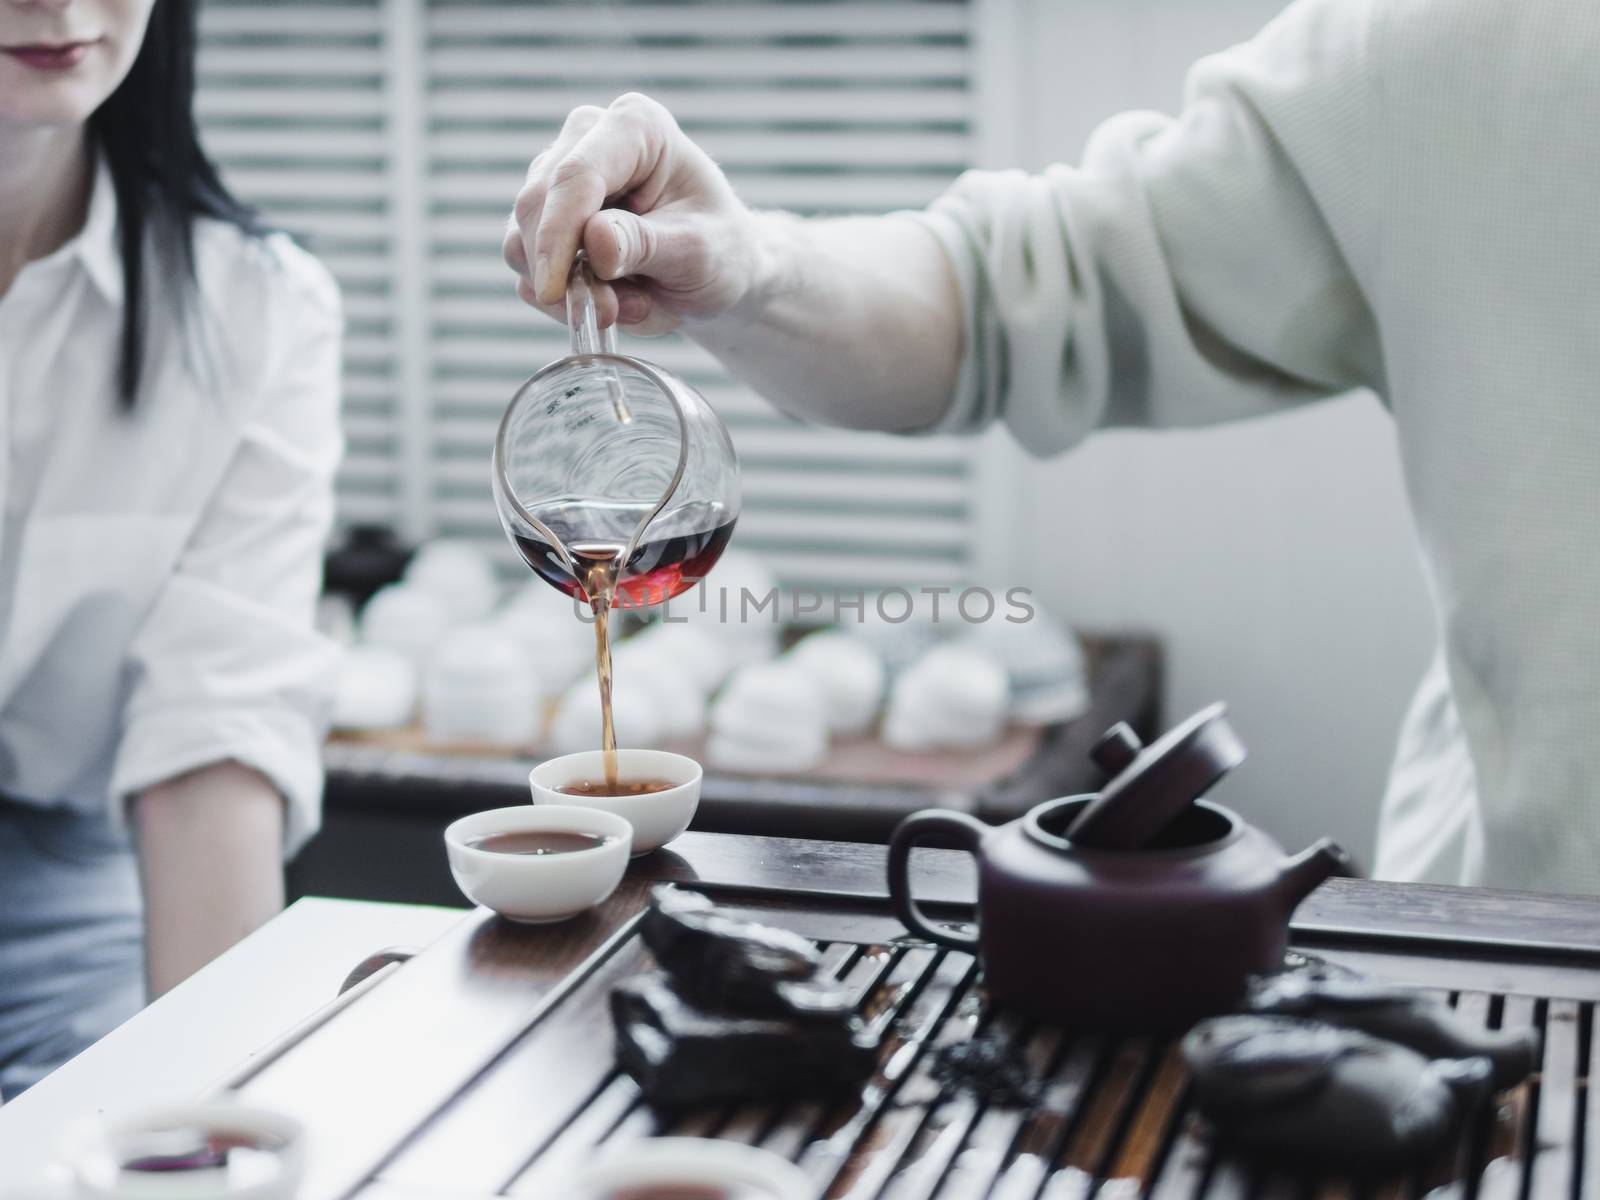 Chinese puerh tea ceremony by fascinadora